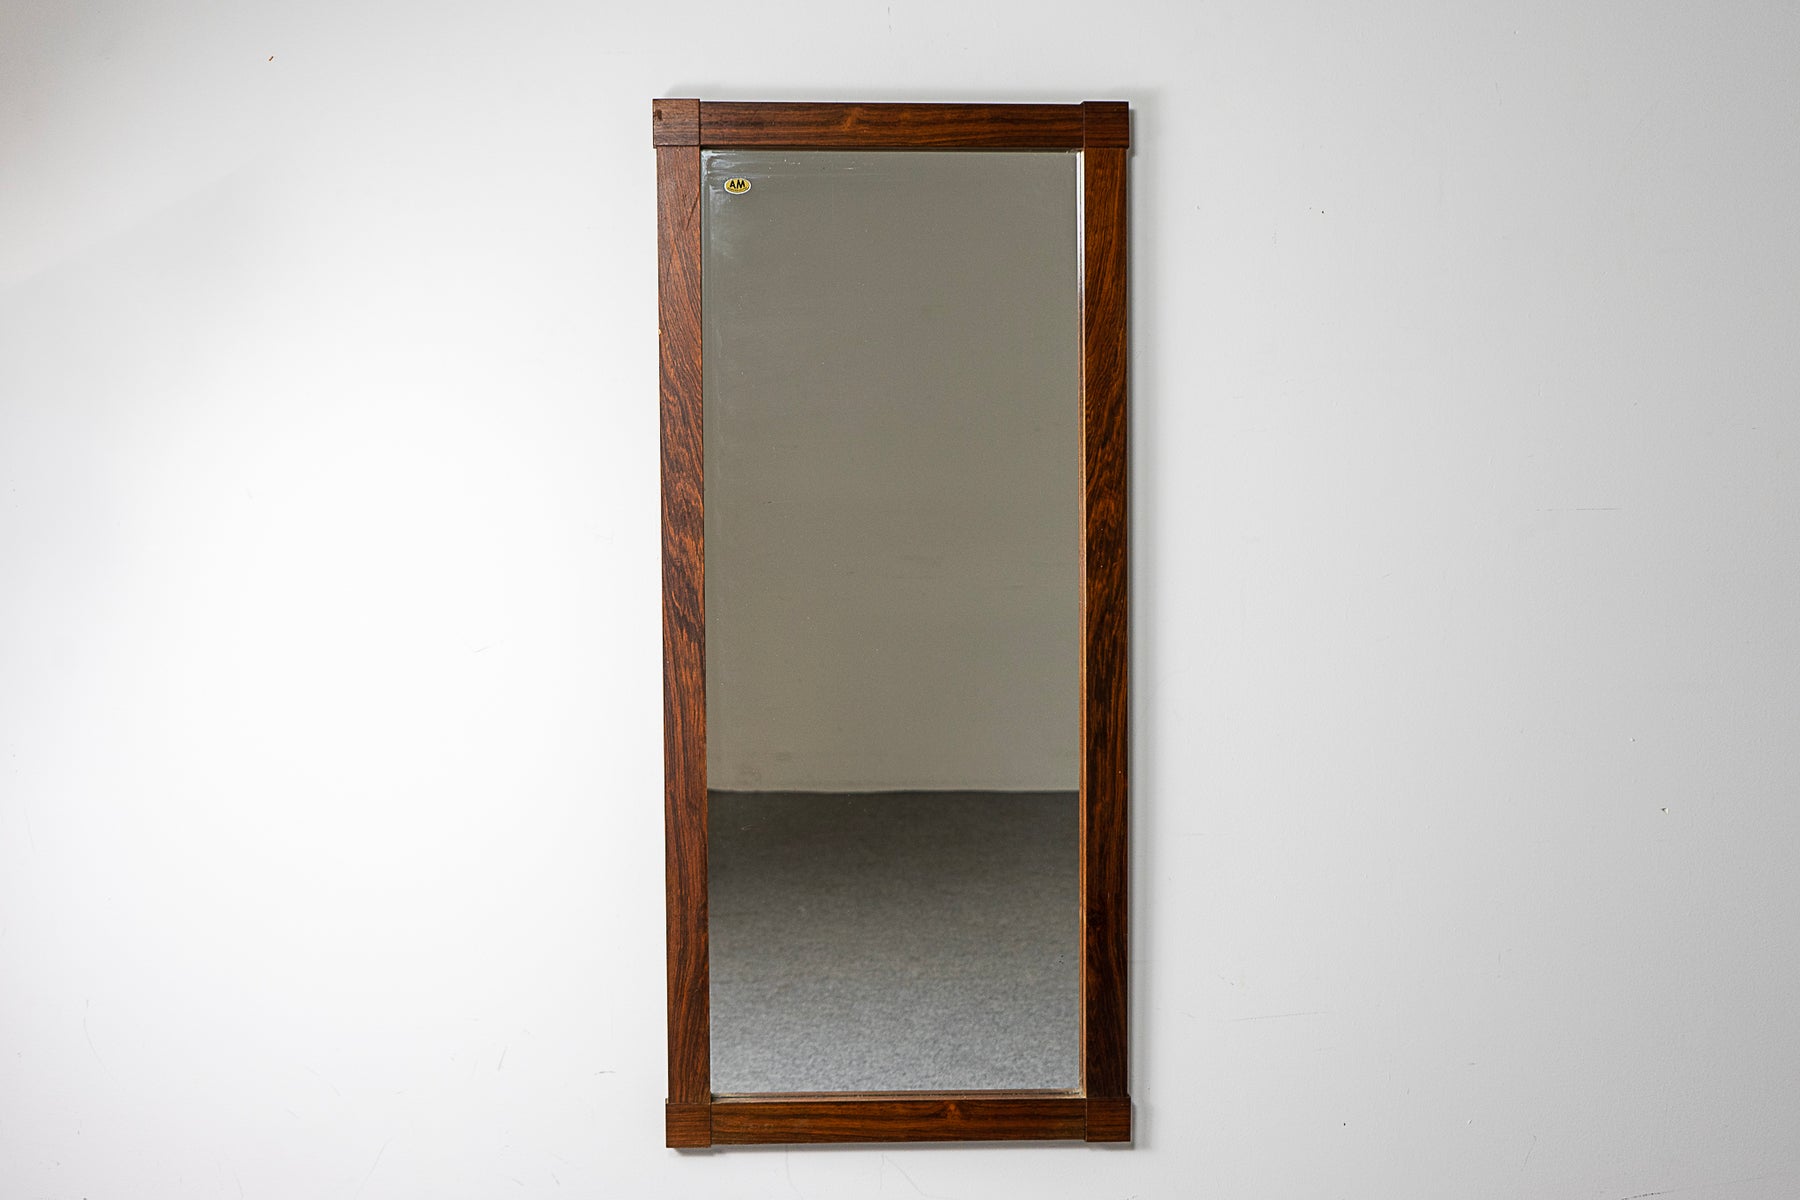 Rosewood Danish Mirror - (321-341.15)